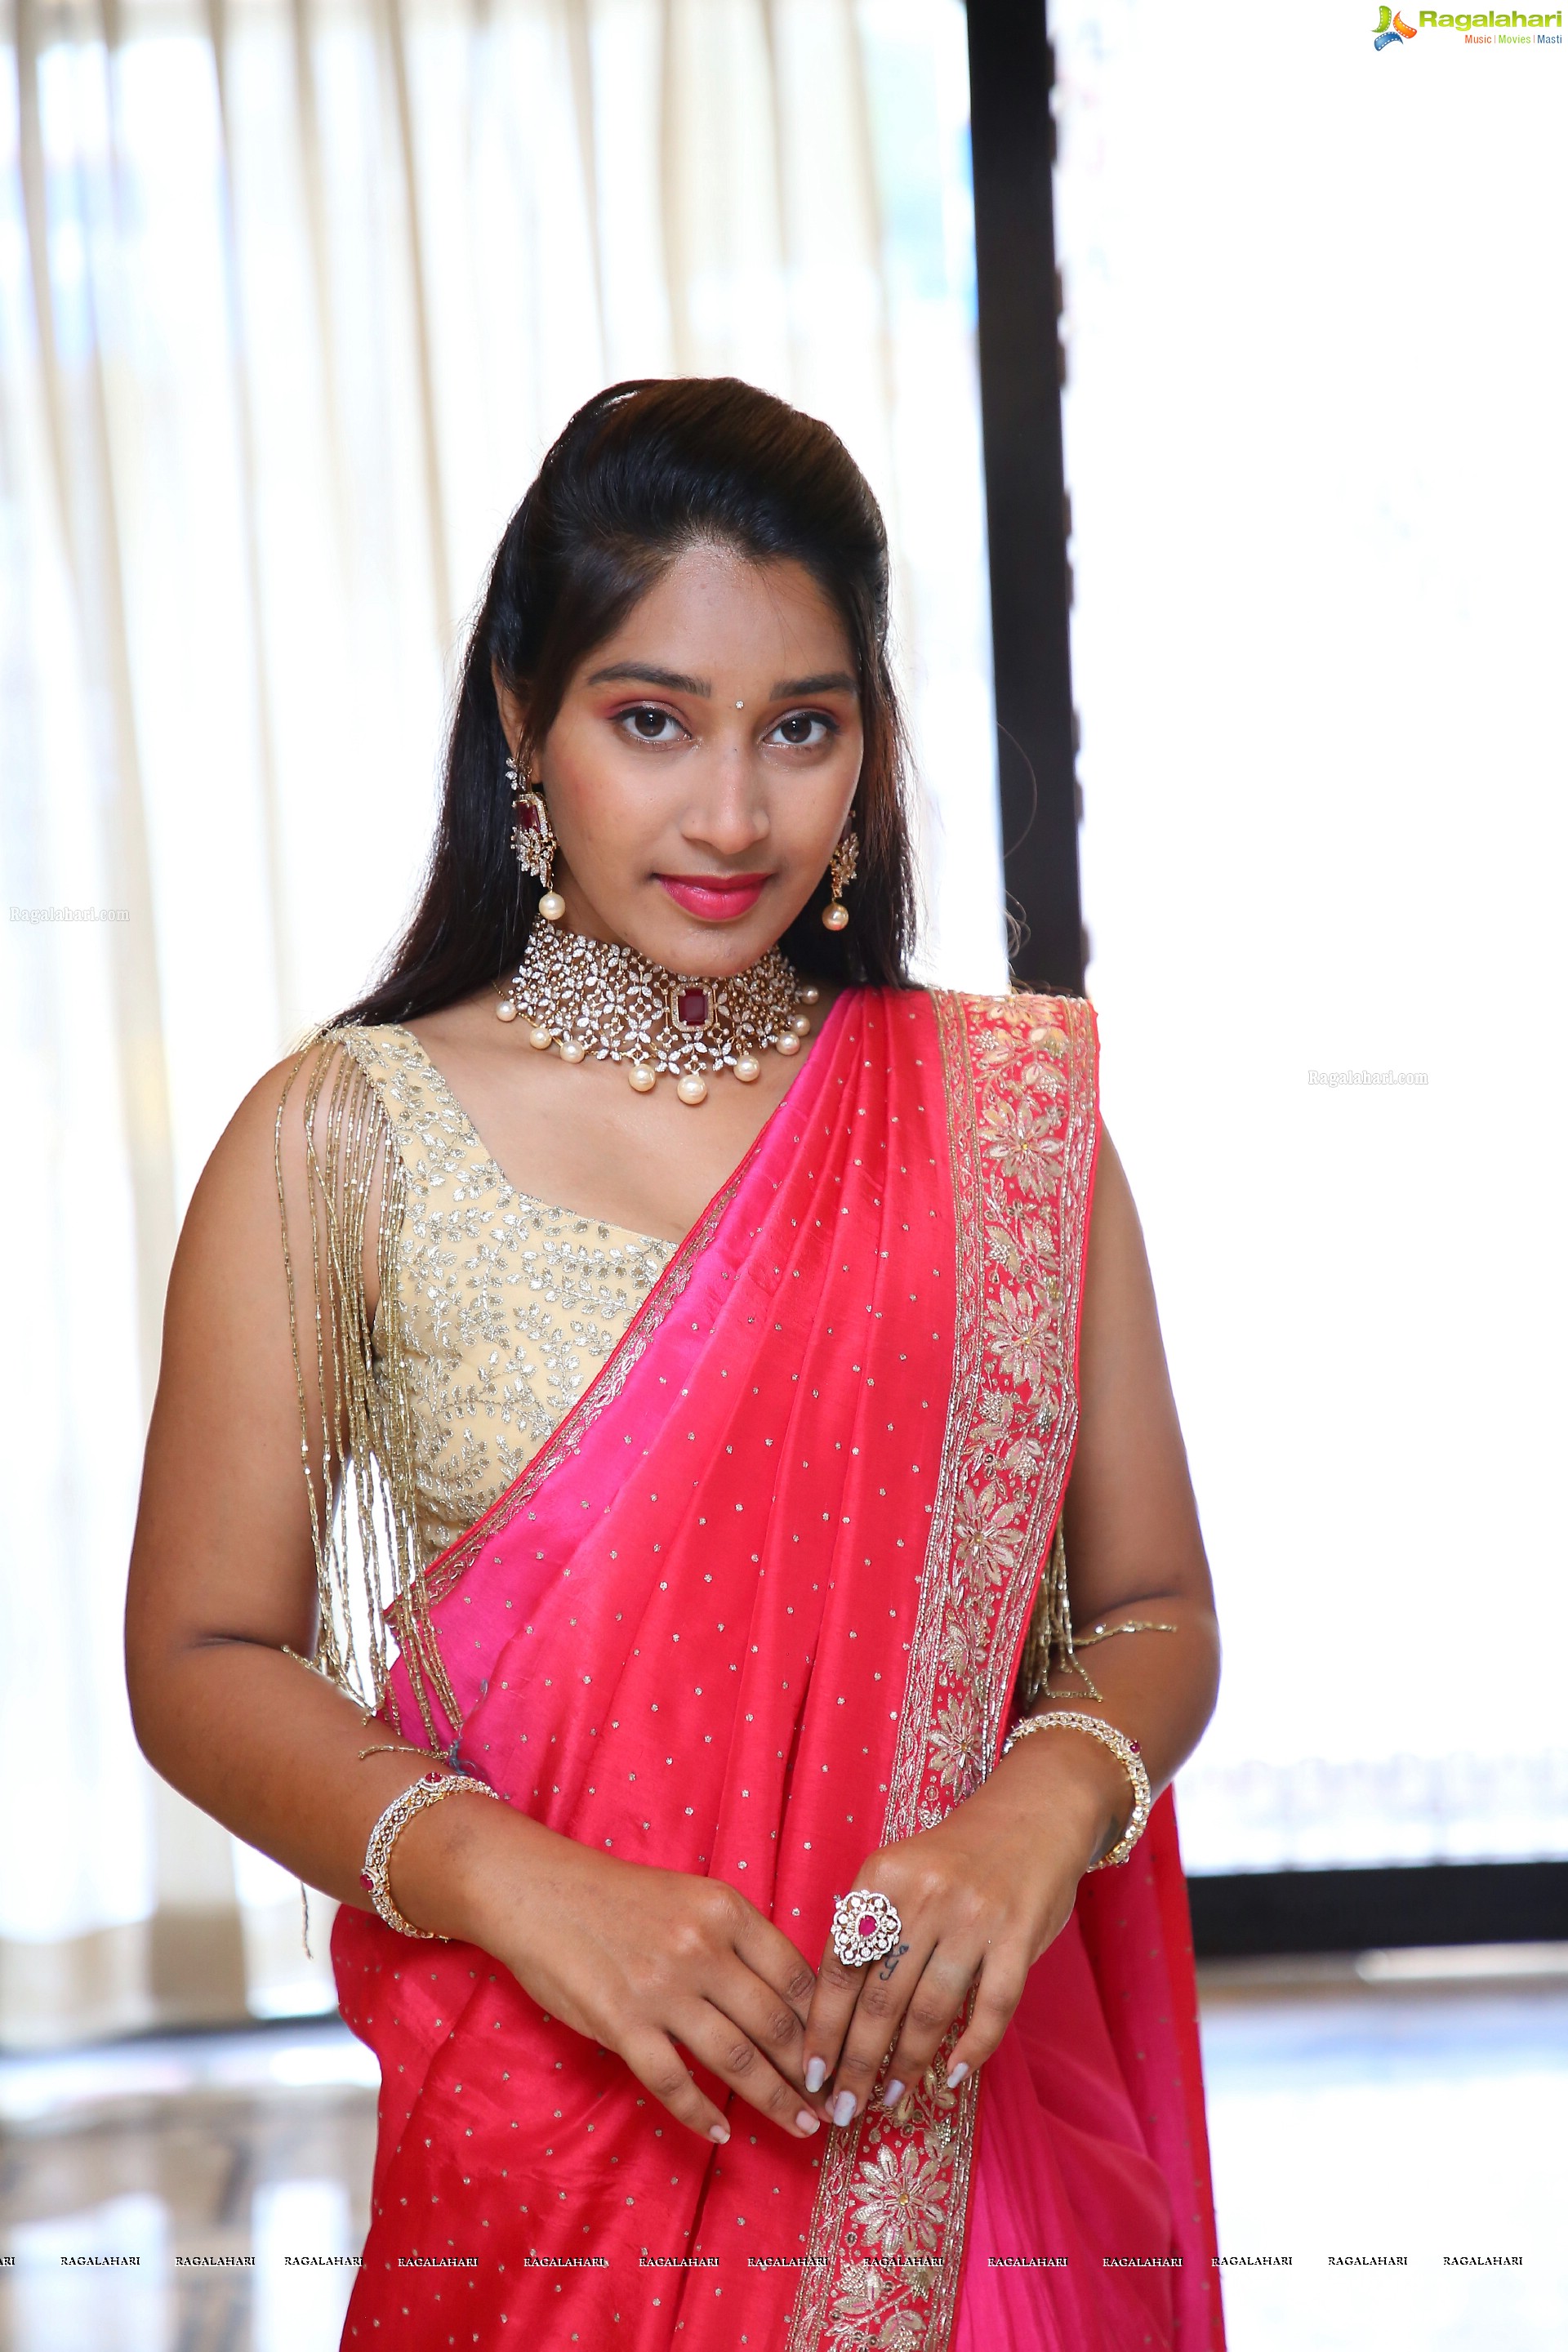 Chandini Gollapudi Poses With Jewellery, HD Photo Gallery